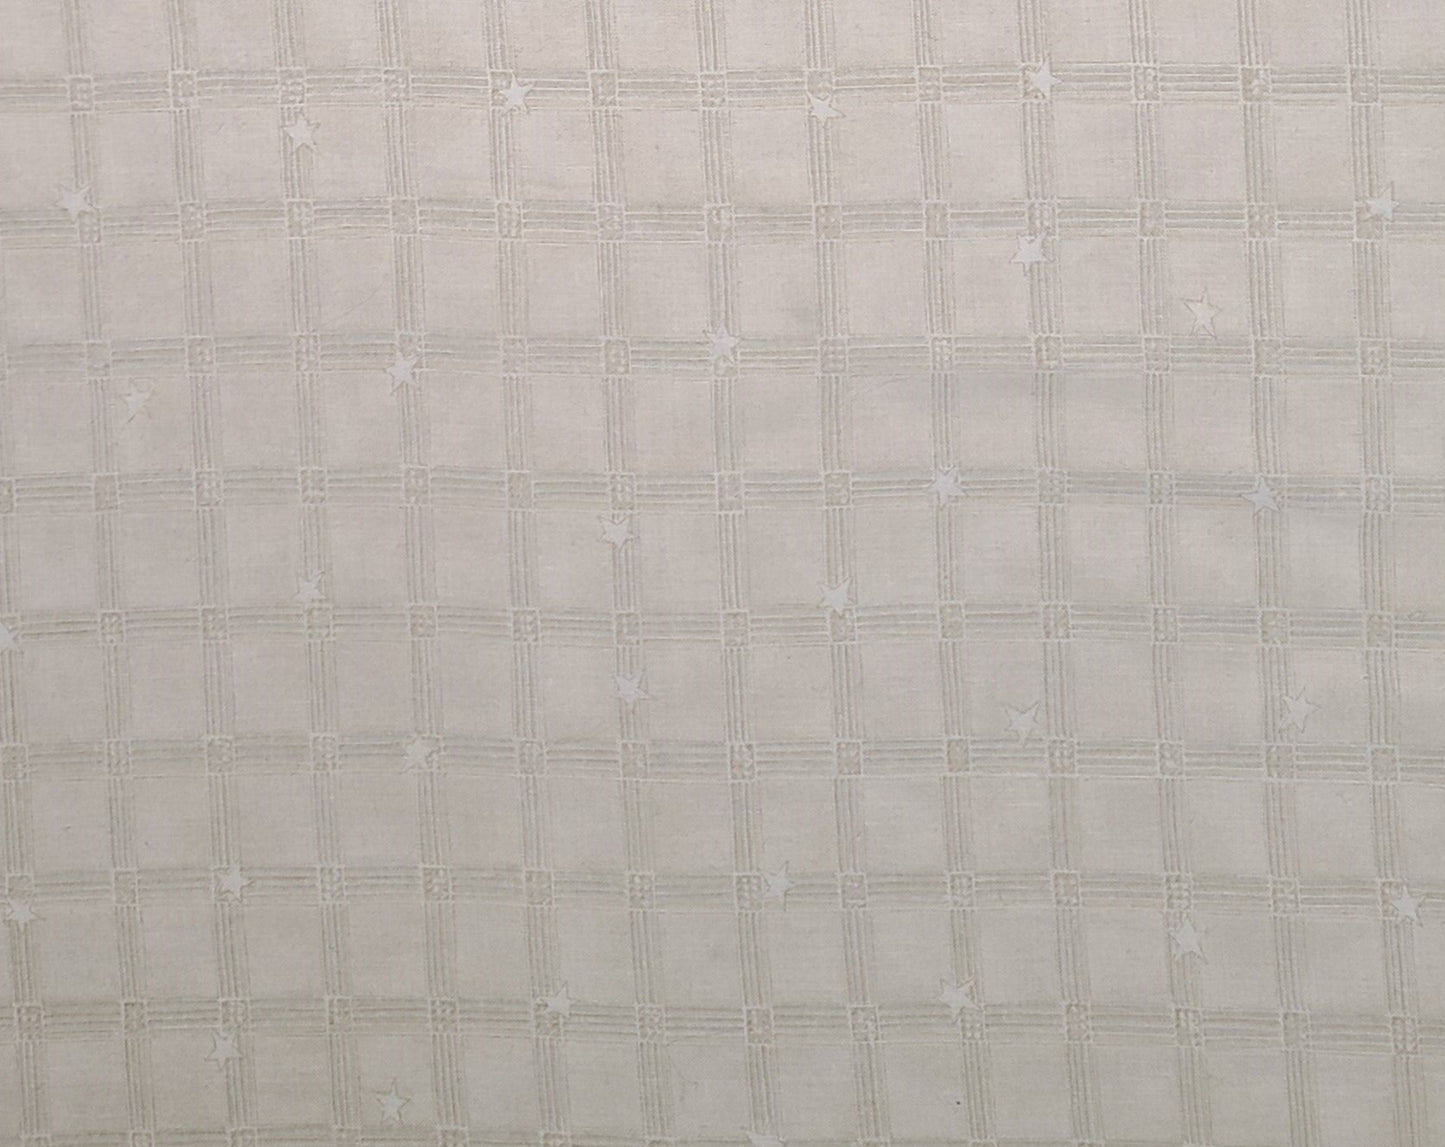 EOB - Cream Fabric / Light Taupe Plaid / White Stars